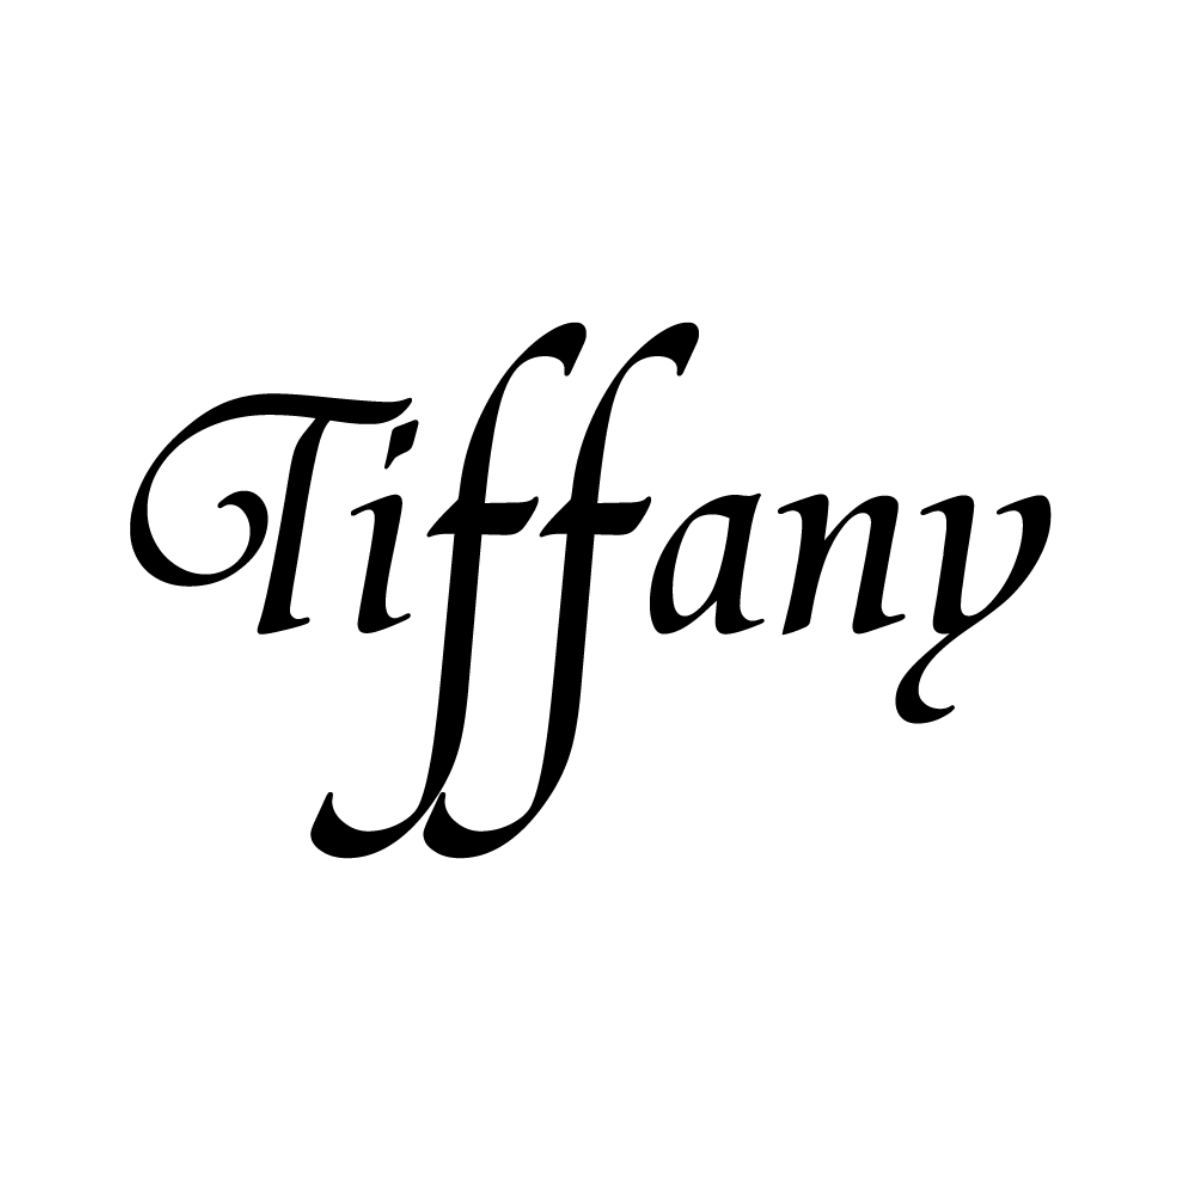 Tiffany Cafe and Restaurant